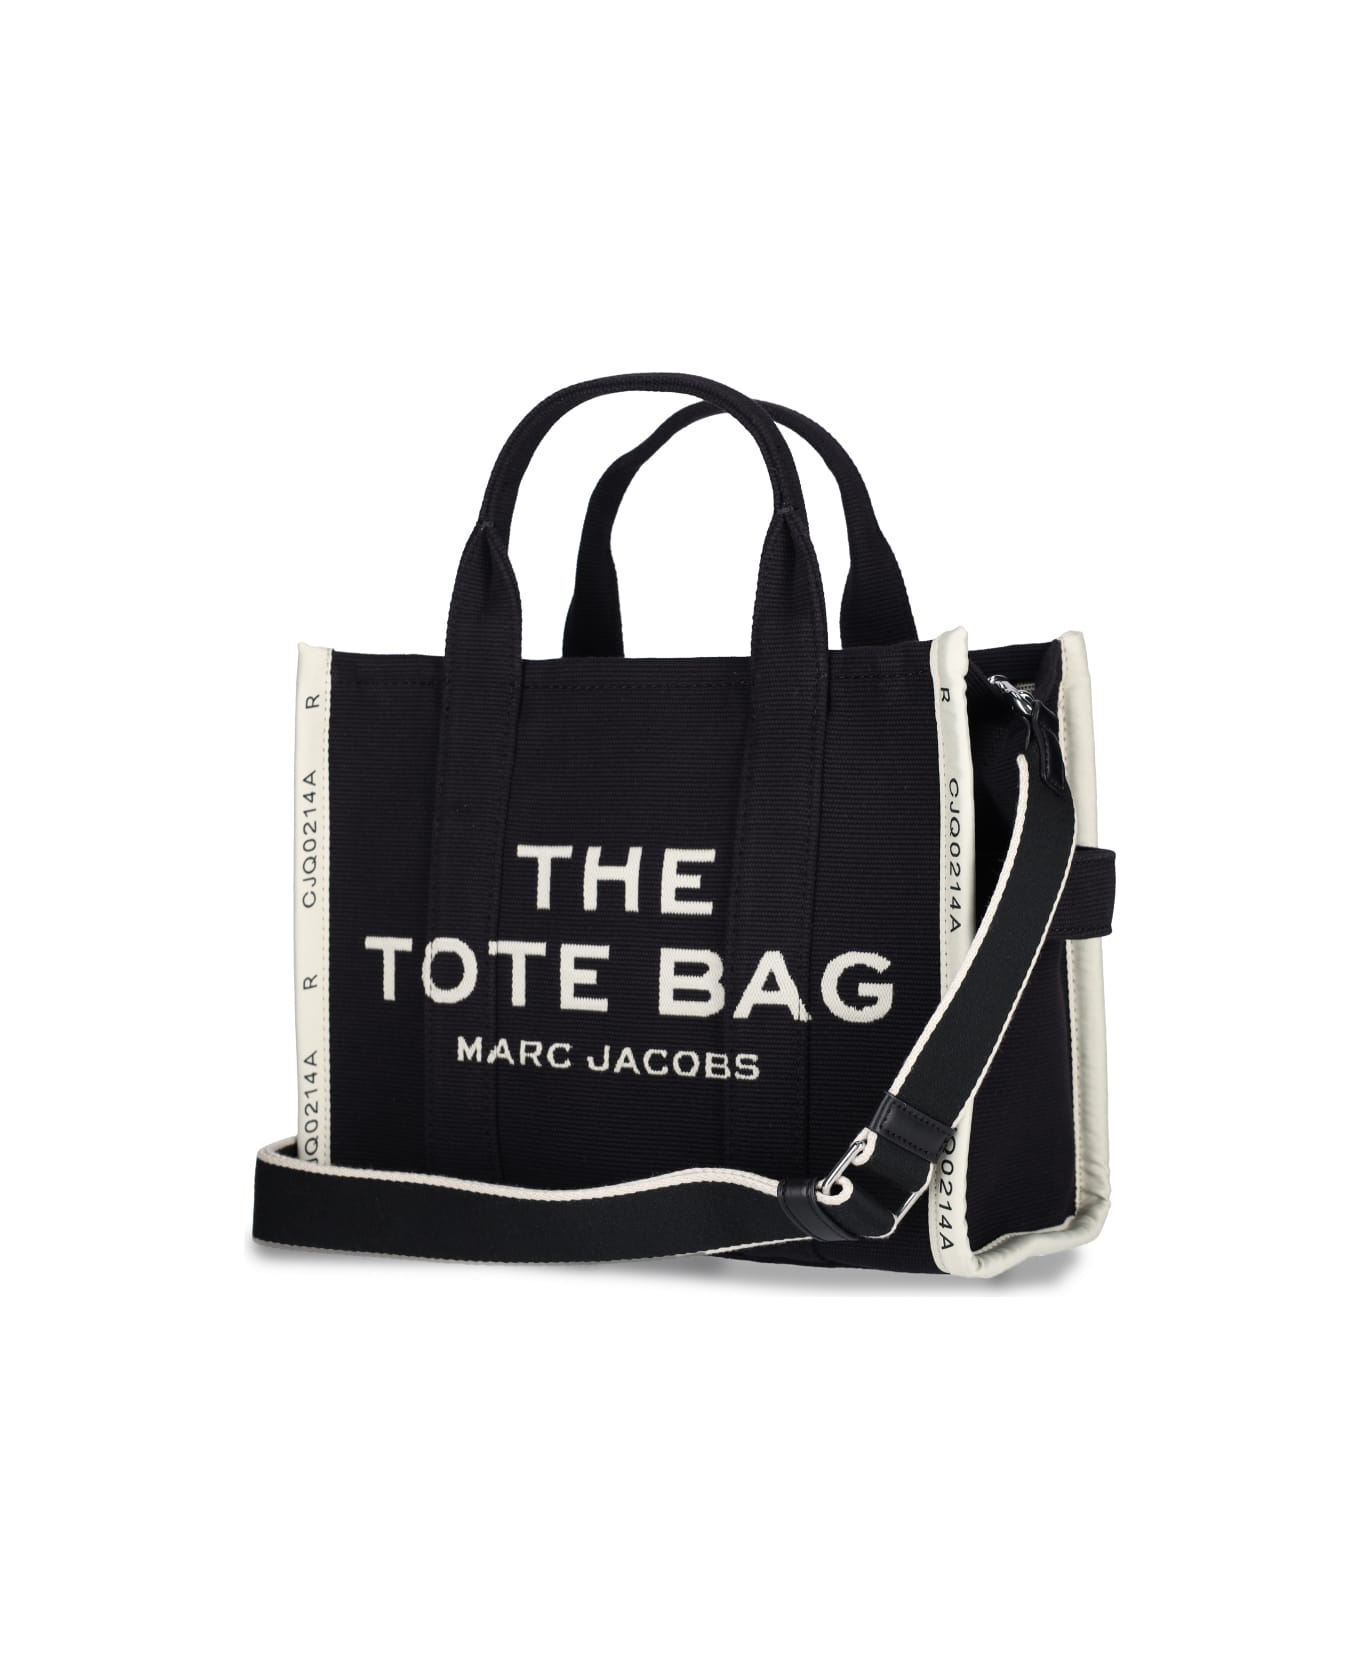 Marc Jacobs 'the Jacquard' Medium Tote Bag - Black  